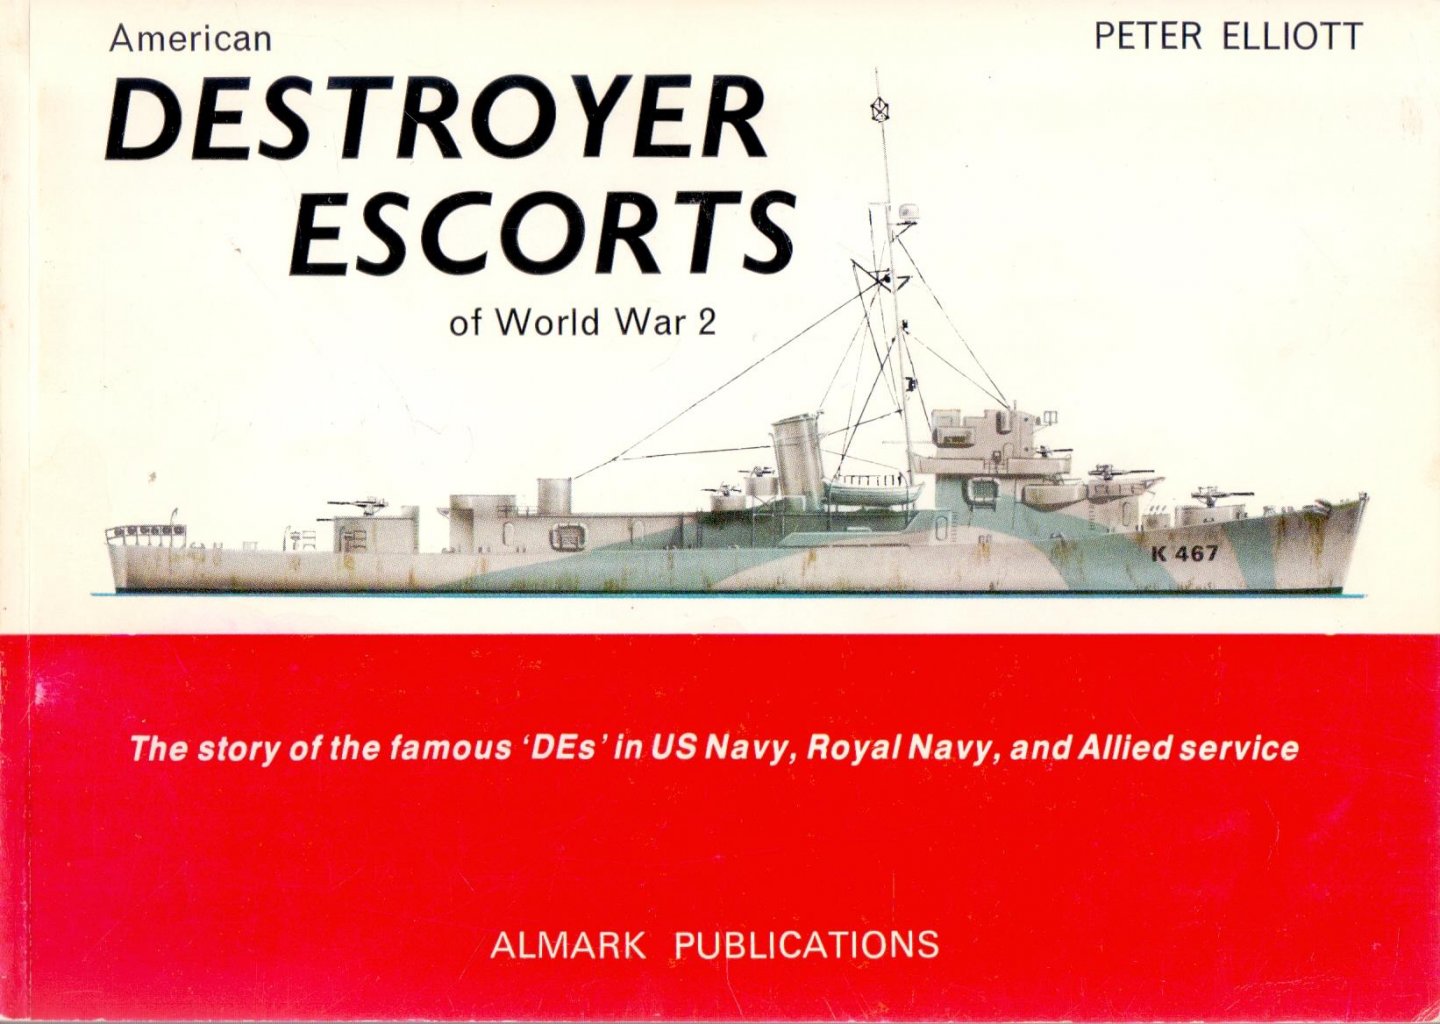 Elliott, Peter (ds35) - American. Destroyers Escort of World War 2